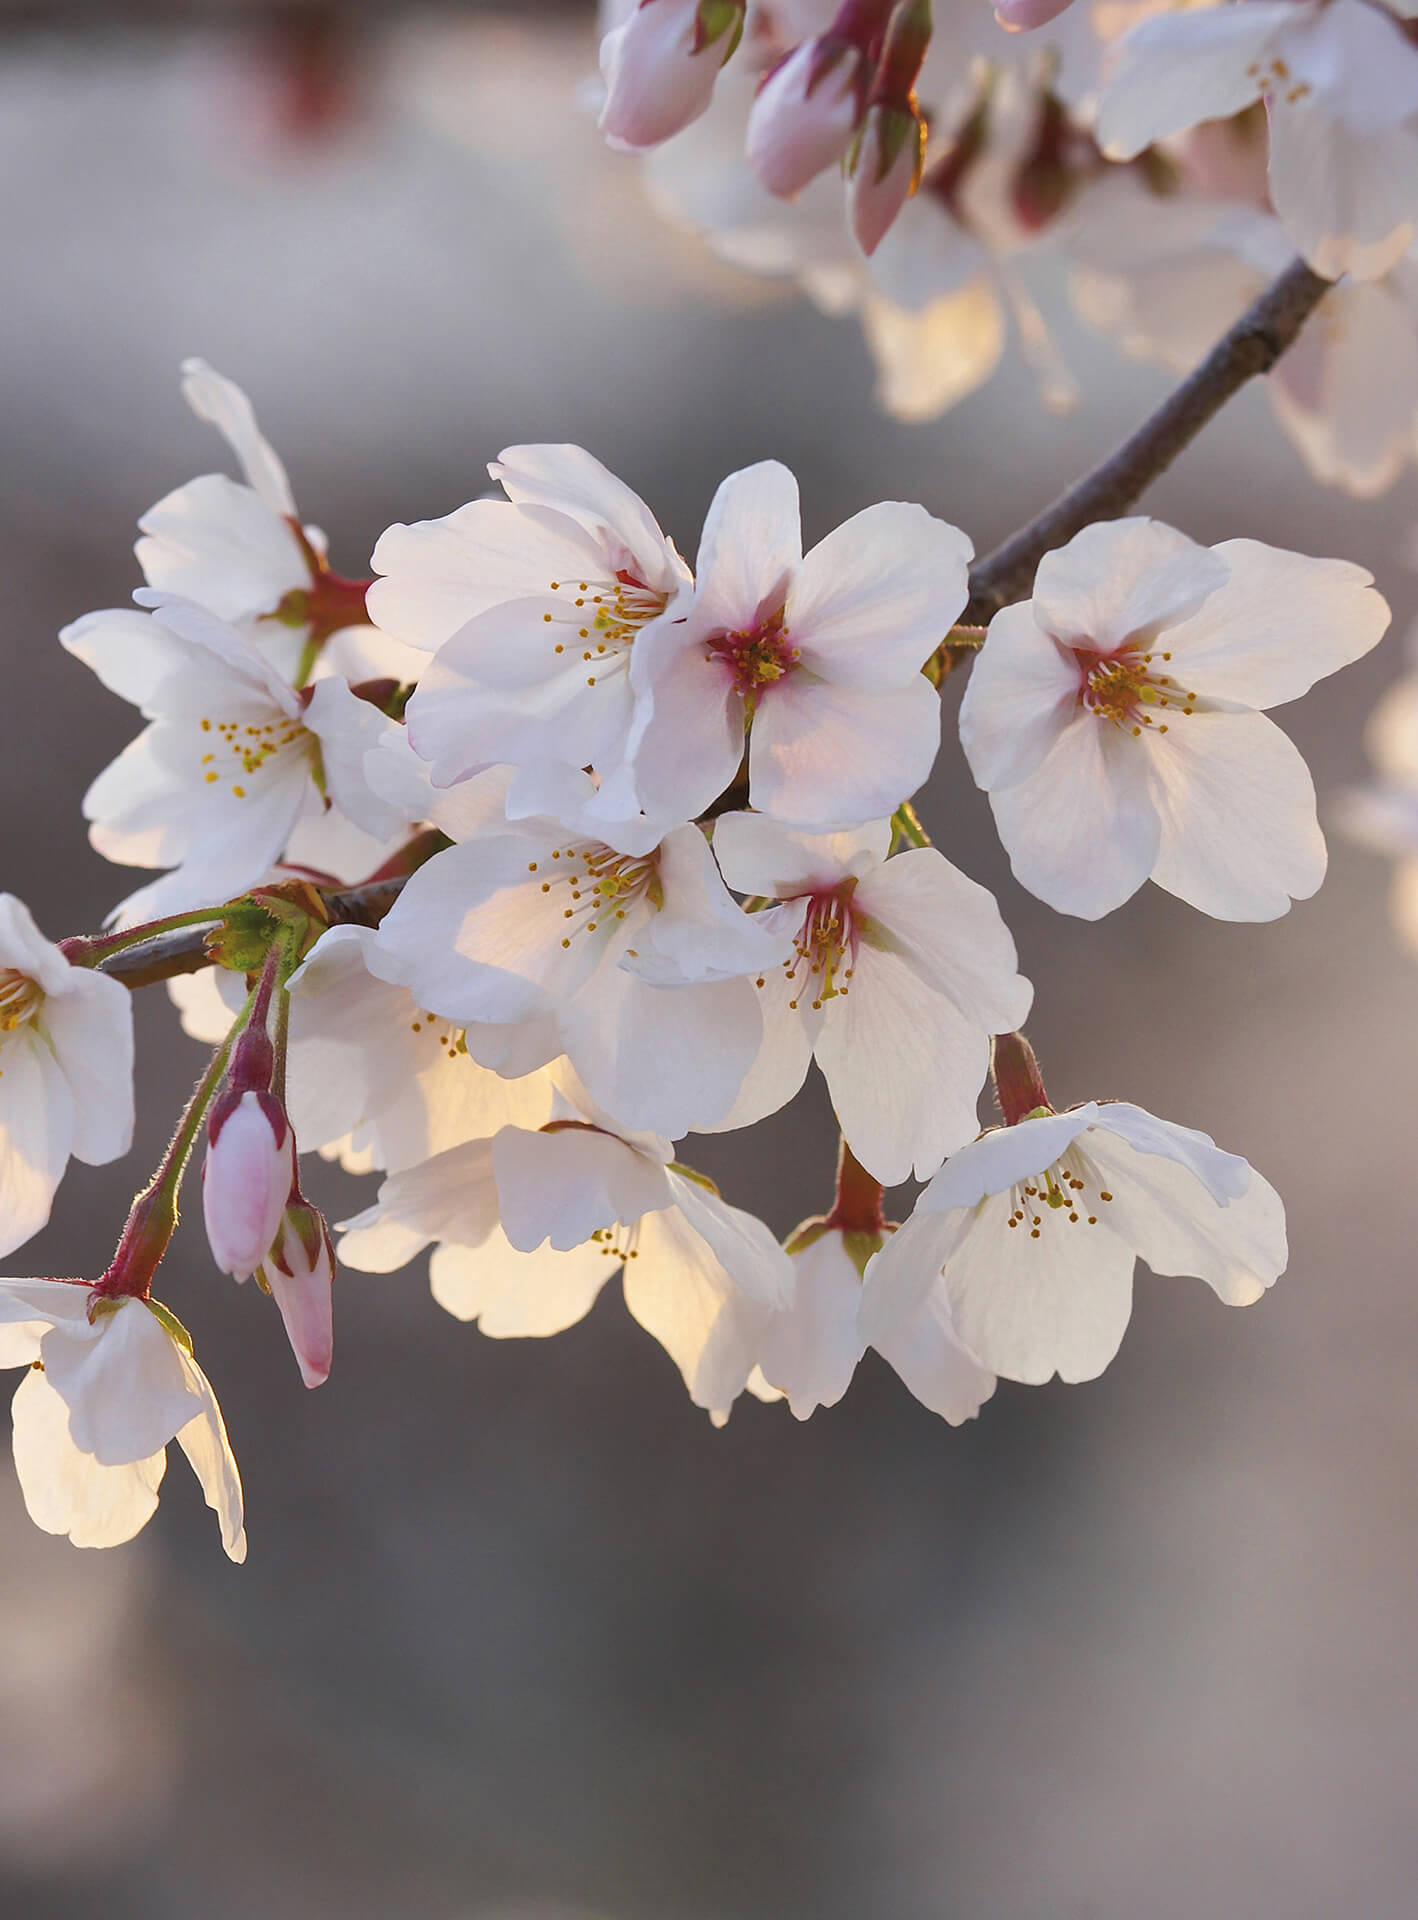 AS Fototapete Designwalls 2.0 Cherry Blossoms DD119174